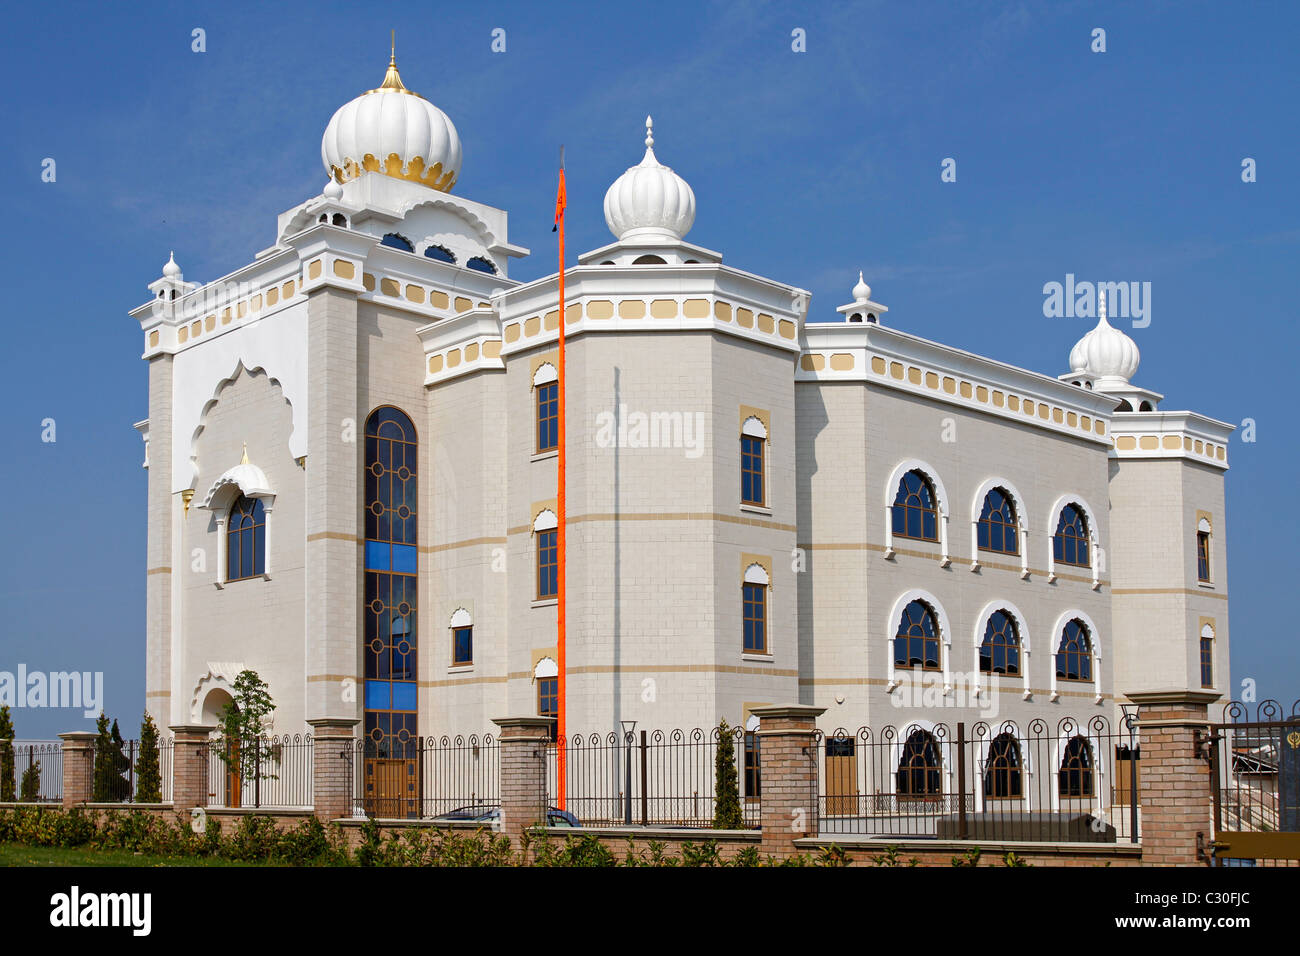 Gurdwara Sahib - Sikh temple - Leamington and Warwick Stock Photo